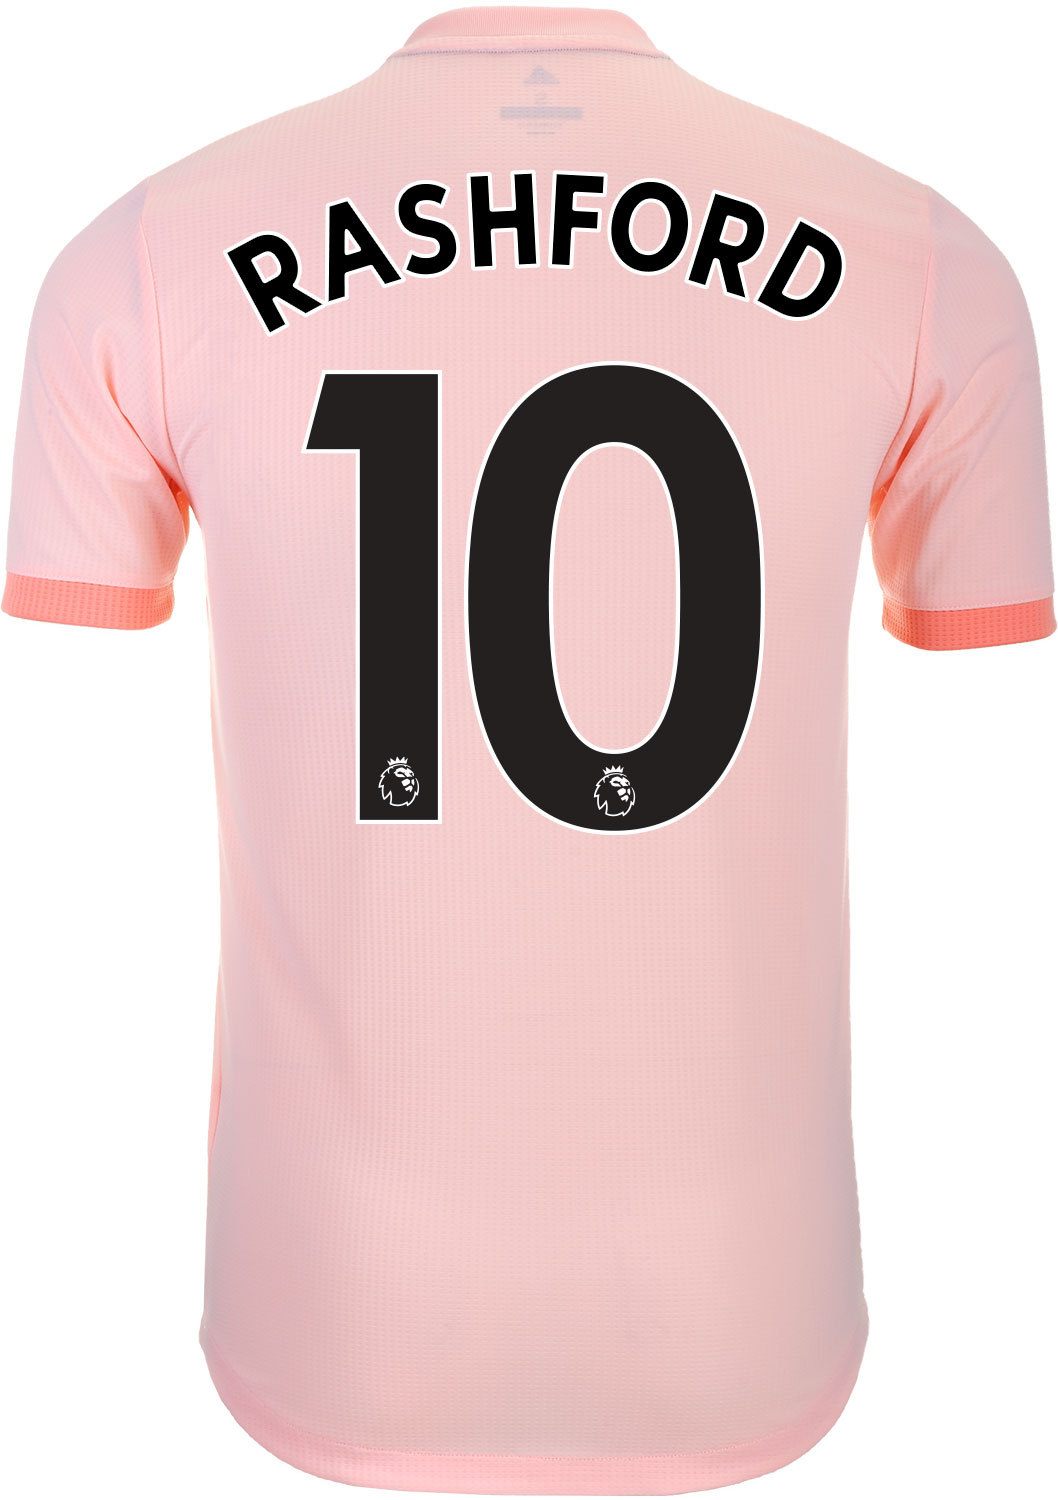 marcus rashford pink jersey